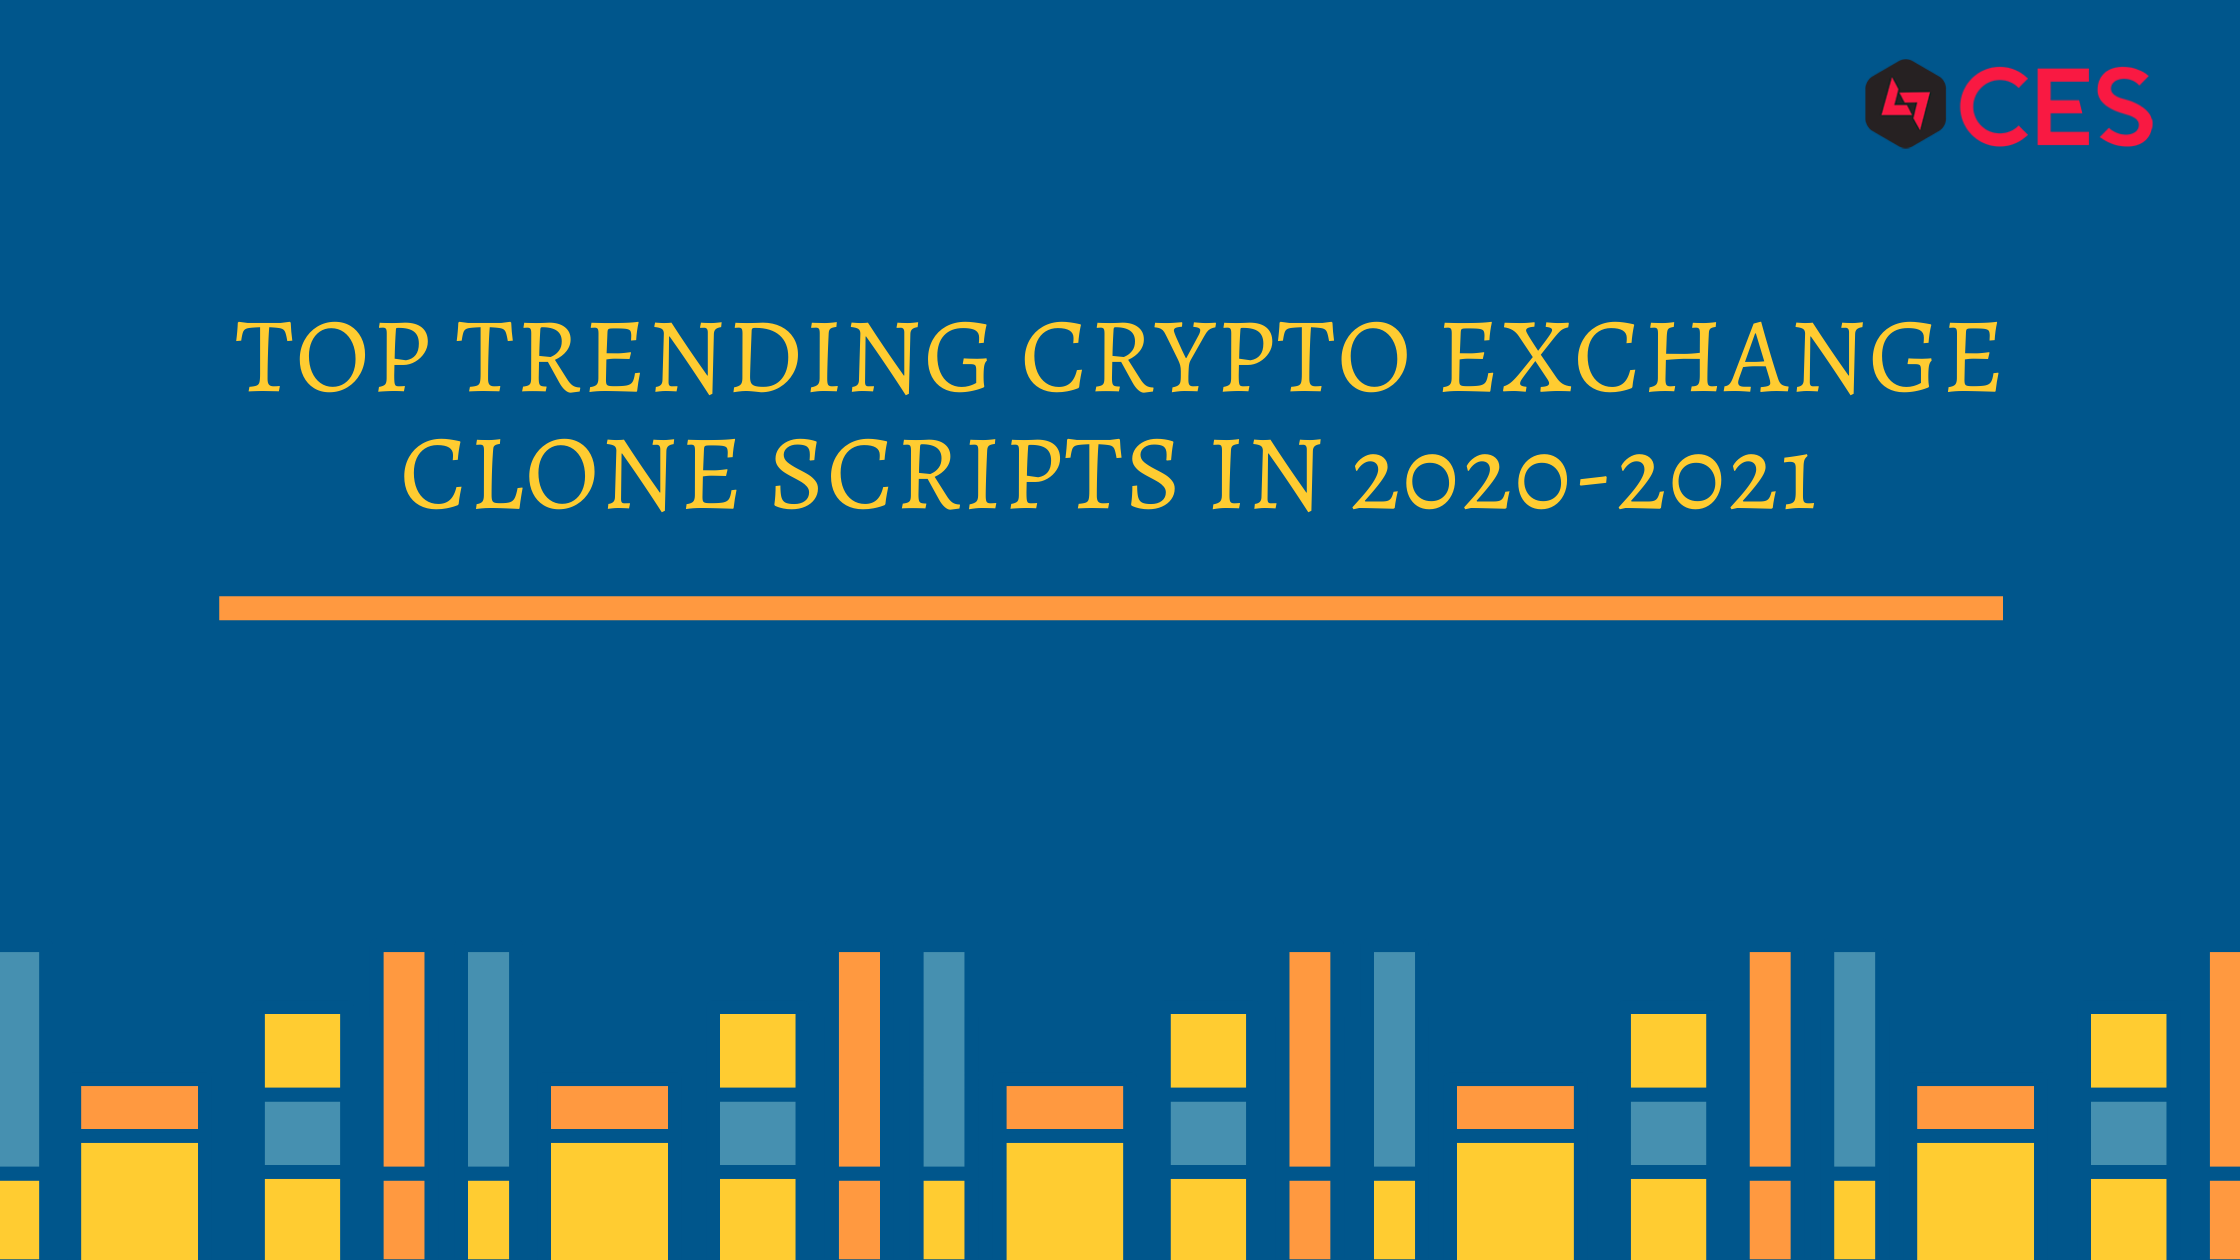 crypto to crypto exchange script